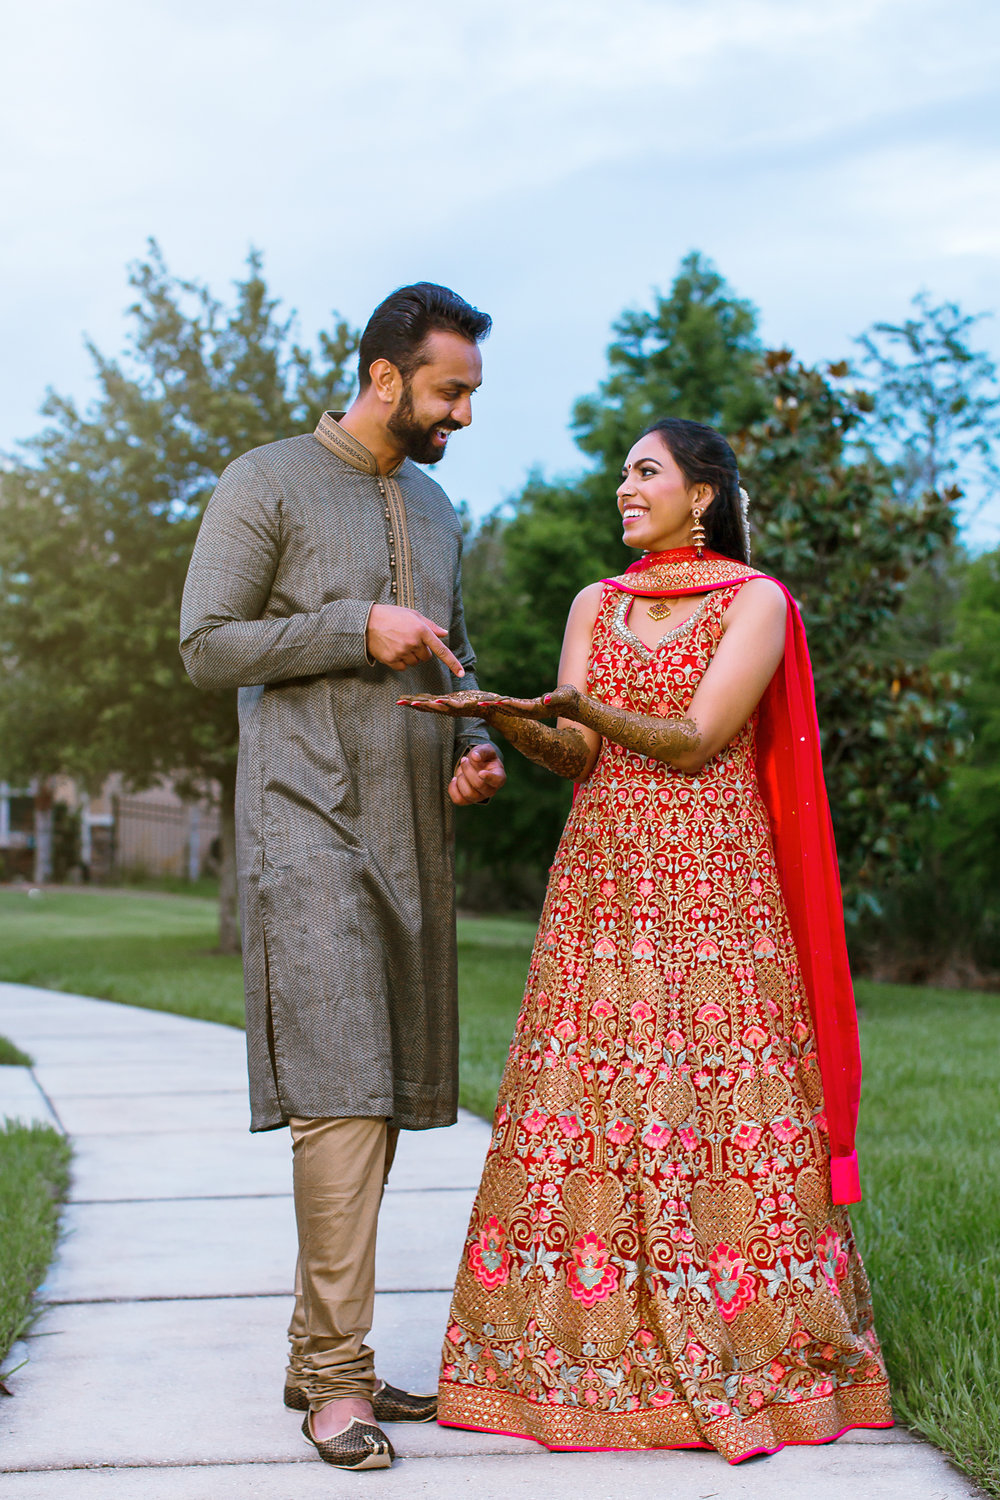 Orlando Indian wedding photography